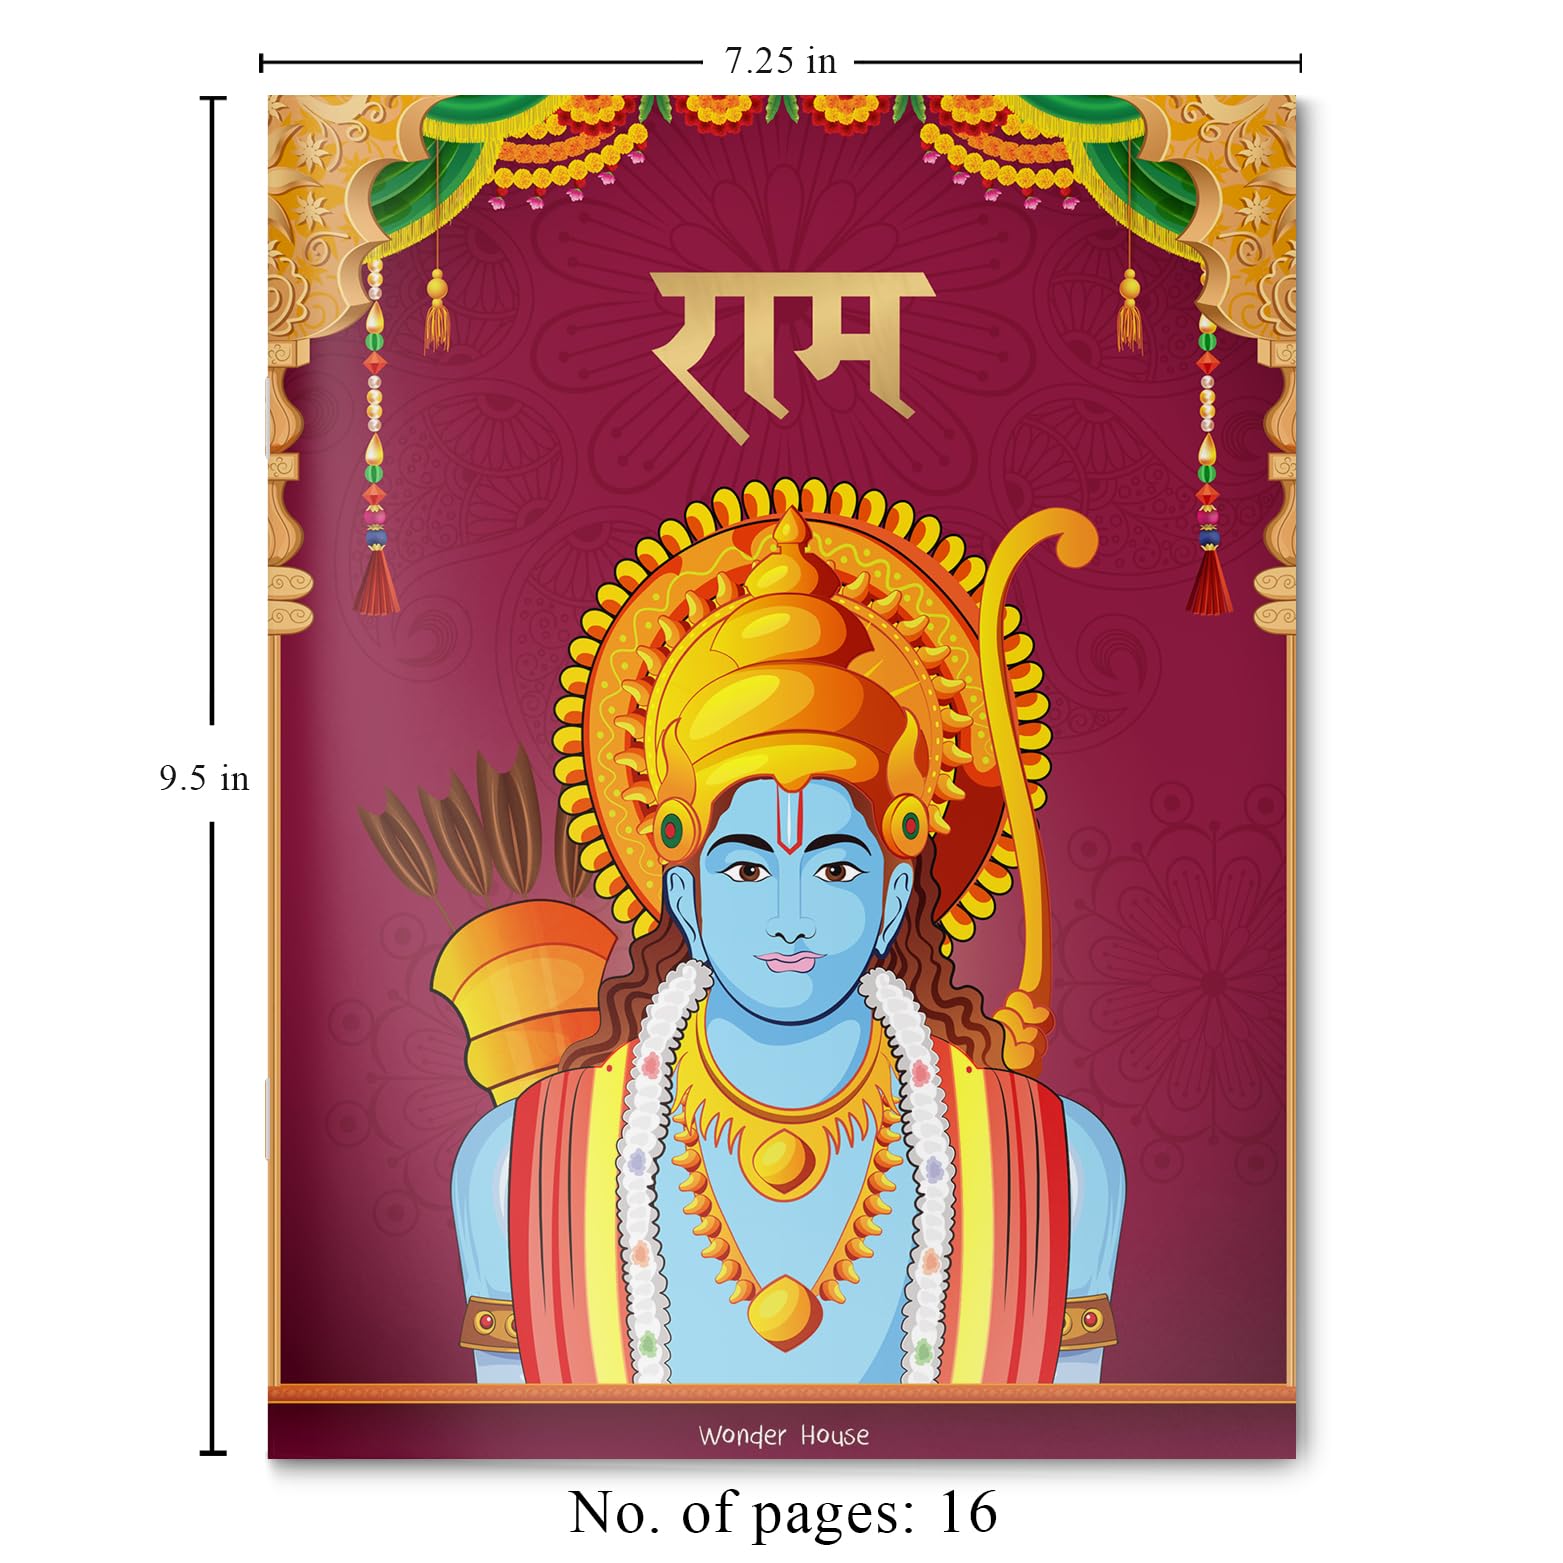 Rama (Tales from Indian Mythology) (Hindi Edition)